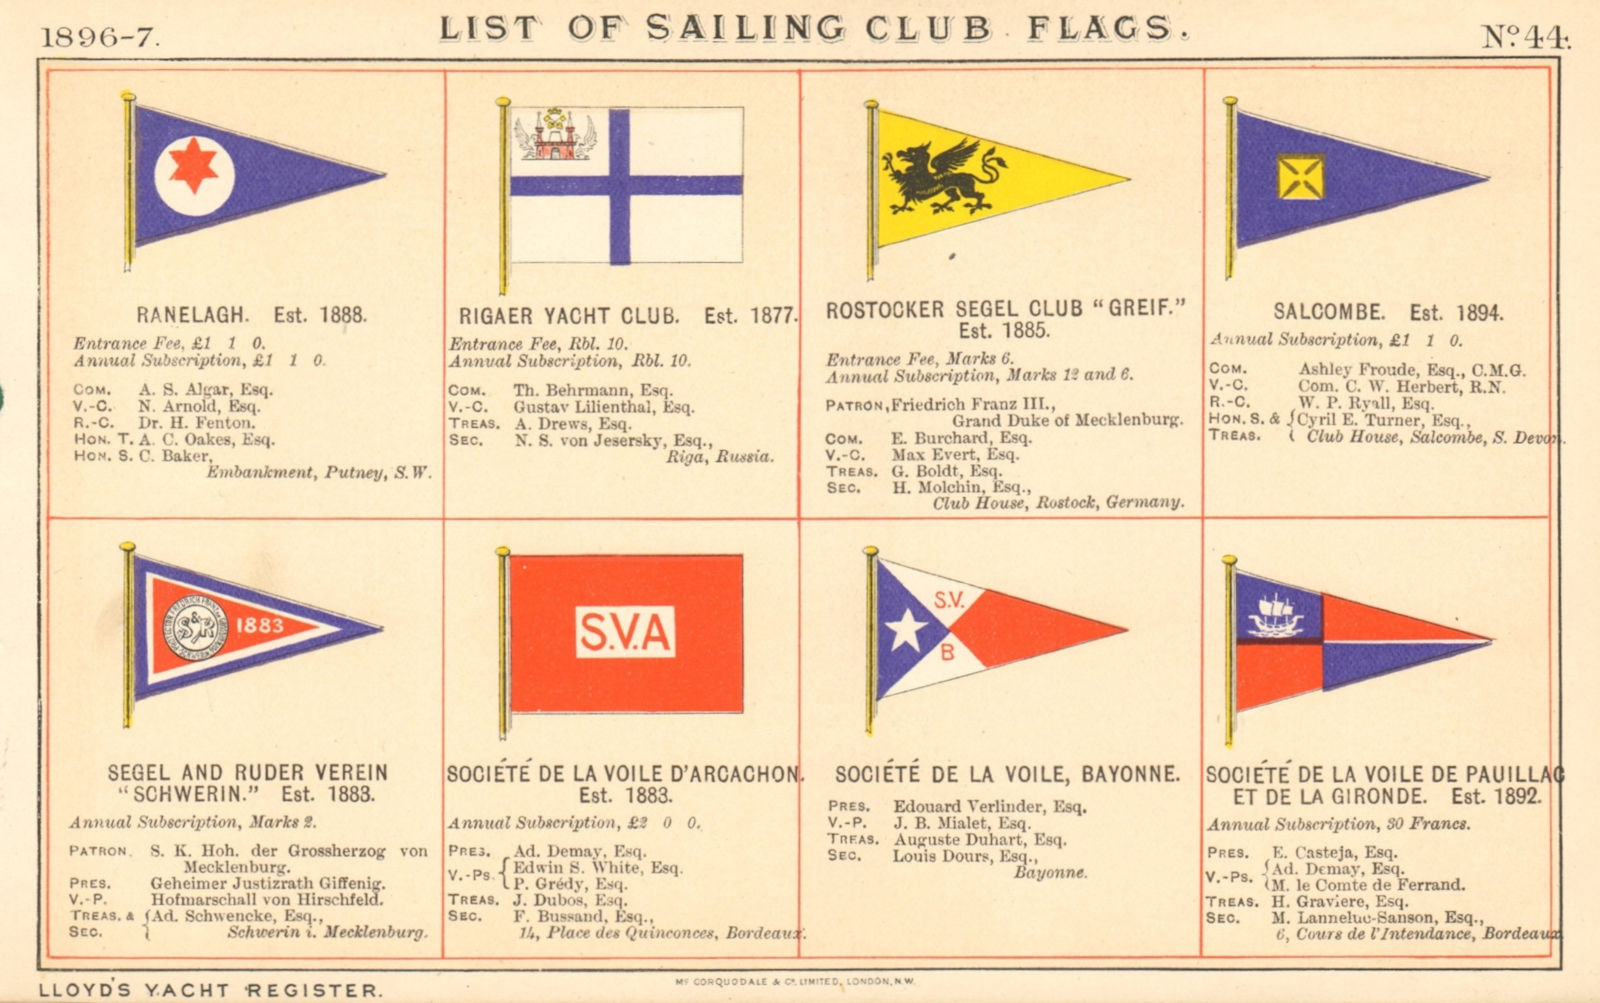 YACHT/SAILING CLUB FLAGS R-S Ranelagh Riga Rostock Salcombe Bayonne Gironde 1896